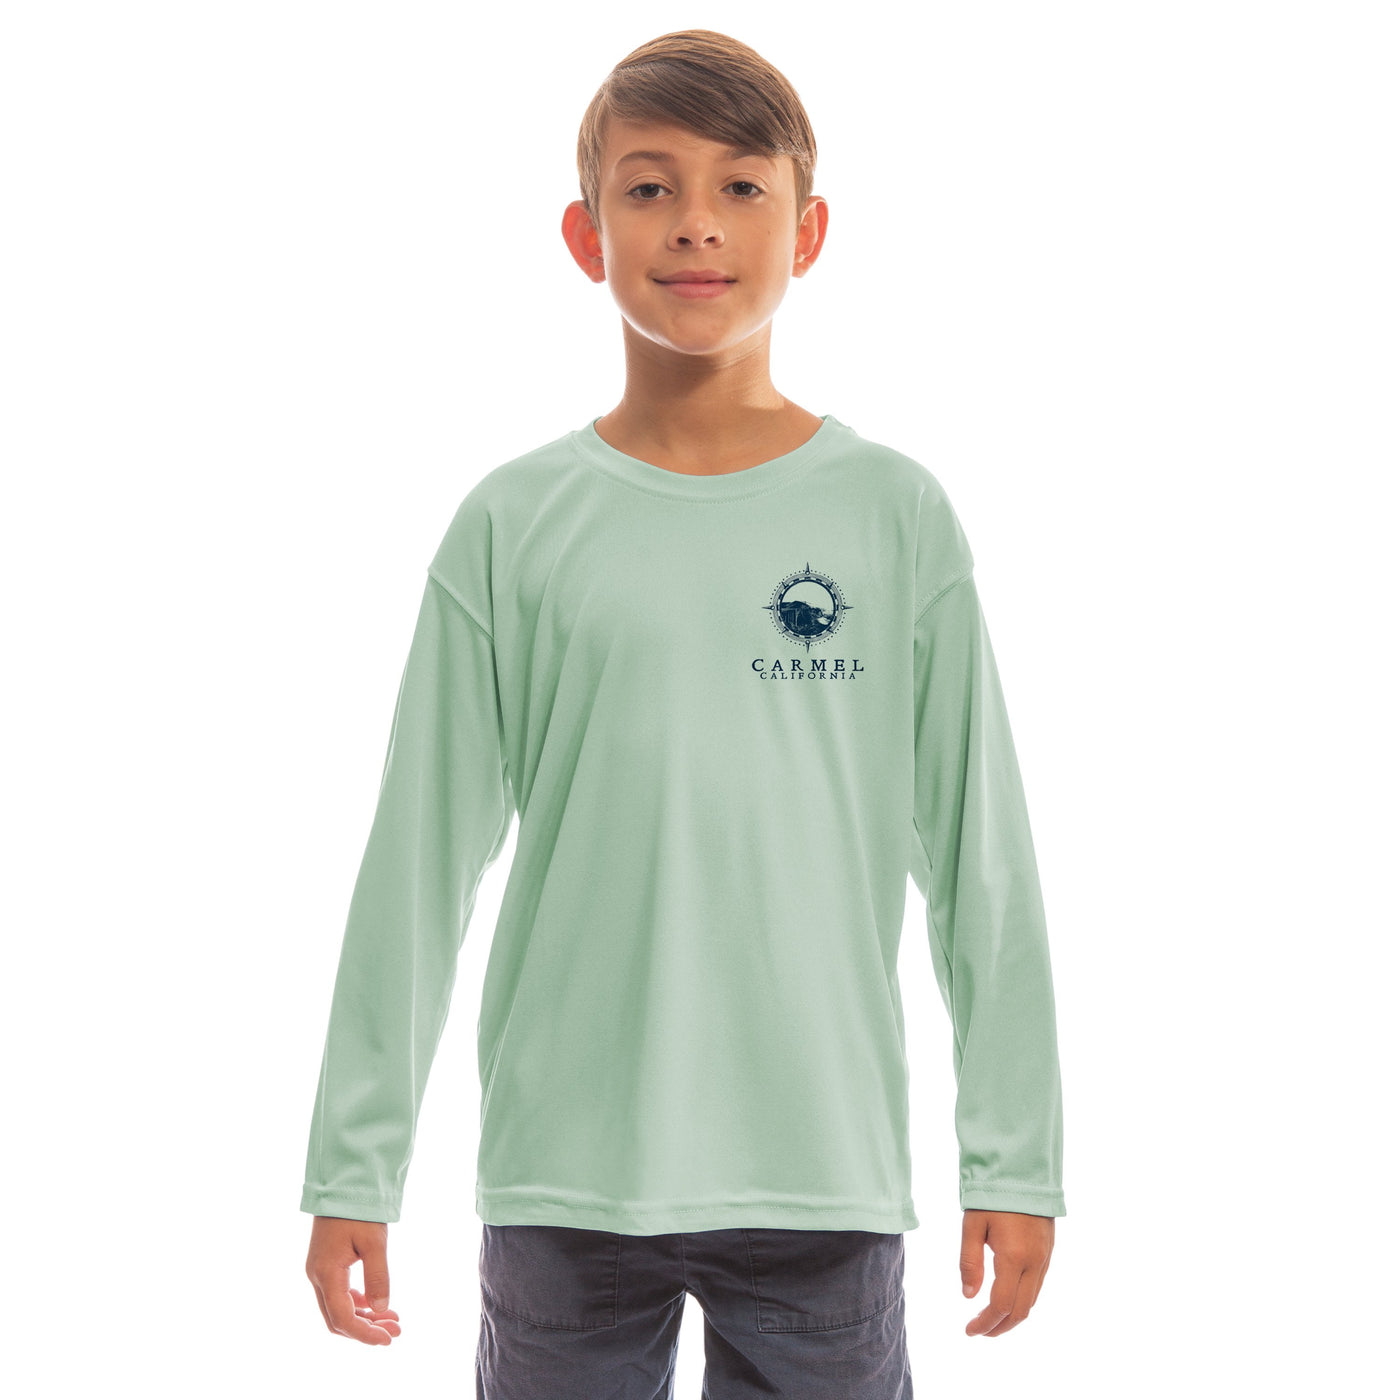 Compass Vintage Carmel Youth UPF 50+ UV/Sun Protection Long Sleeve T-Shirt